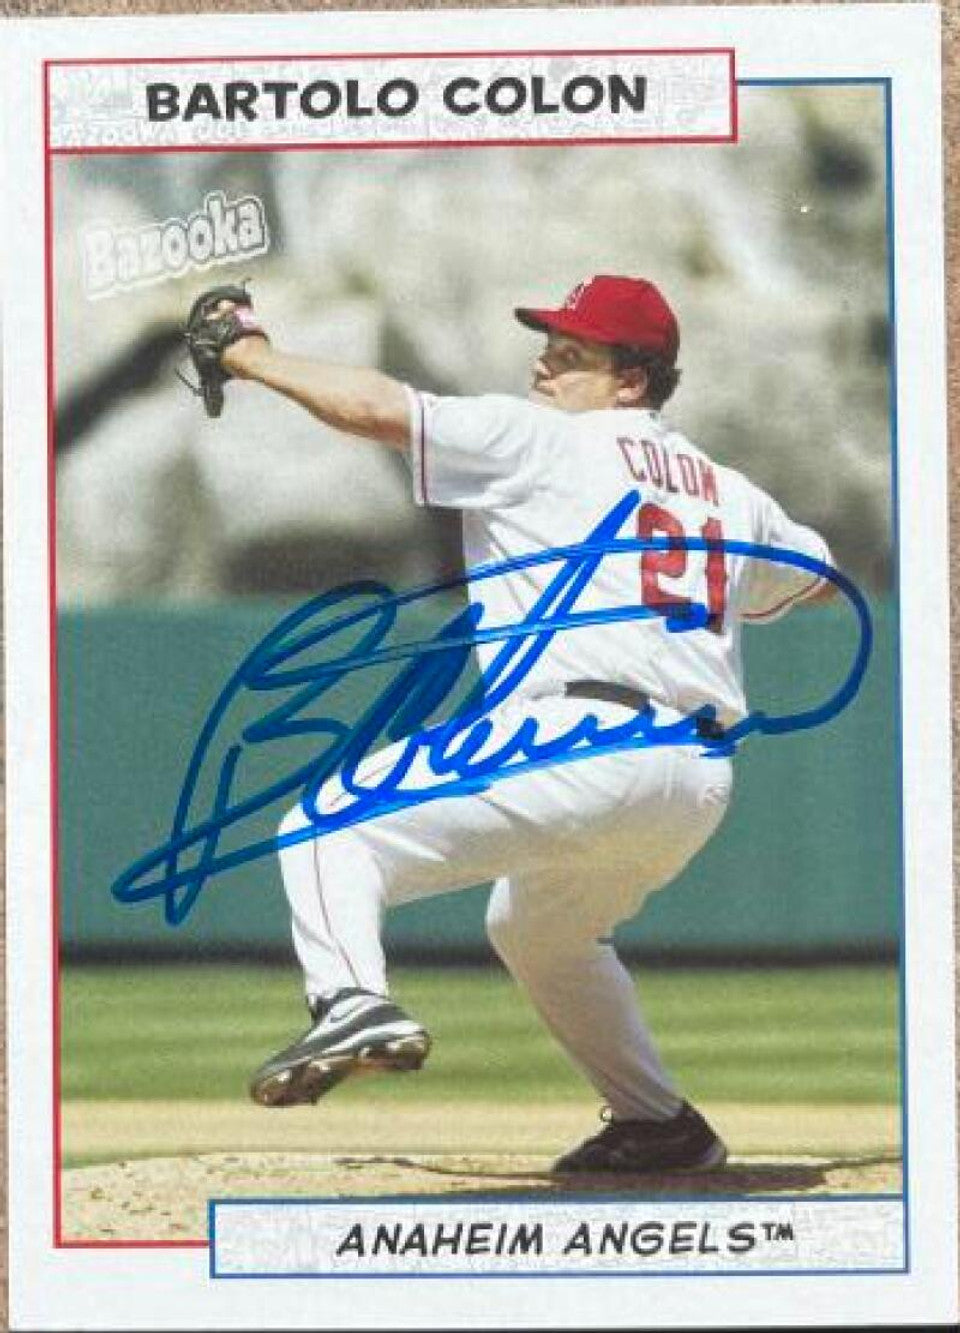 Bartolo Colon Signed 2005 Topps Bazooka Baseball Card - Anaheim Angels